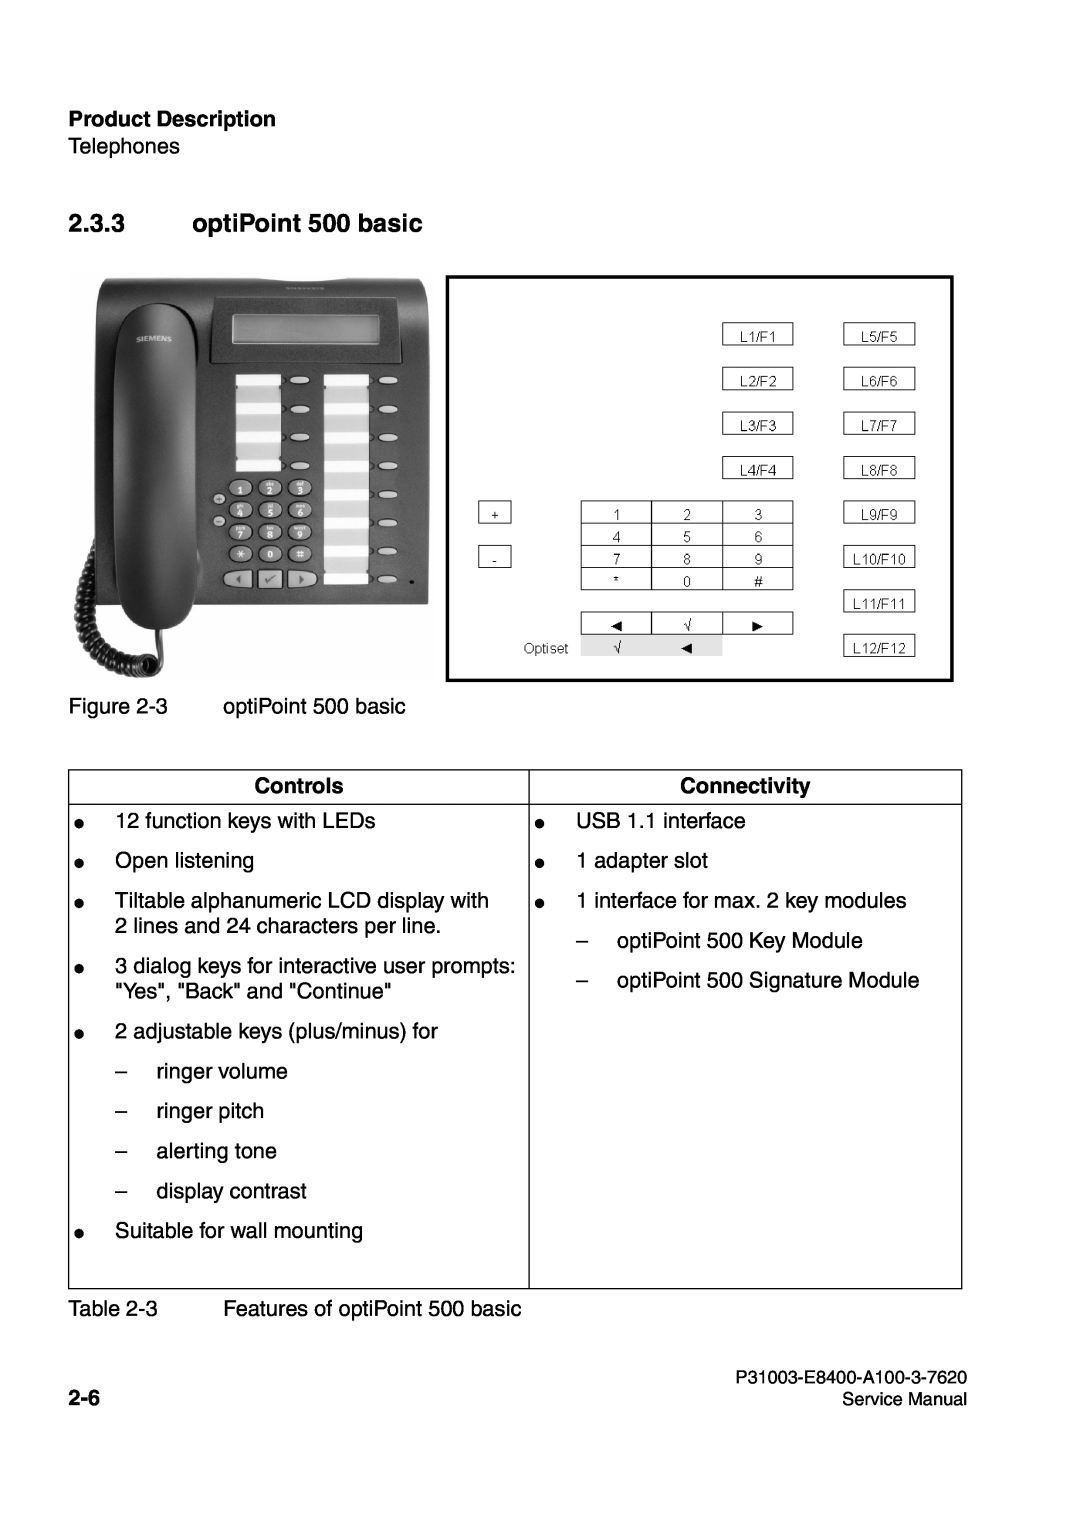 Siemens service manual optiPoint 500 basic, Product Description, Controls, Connectivity 